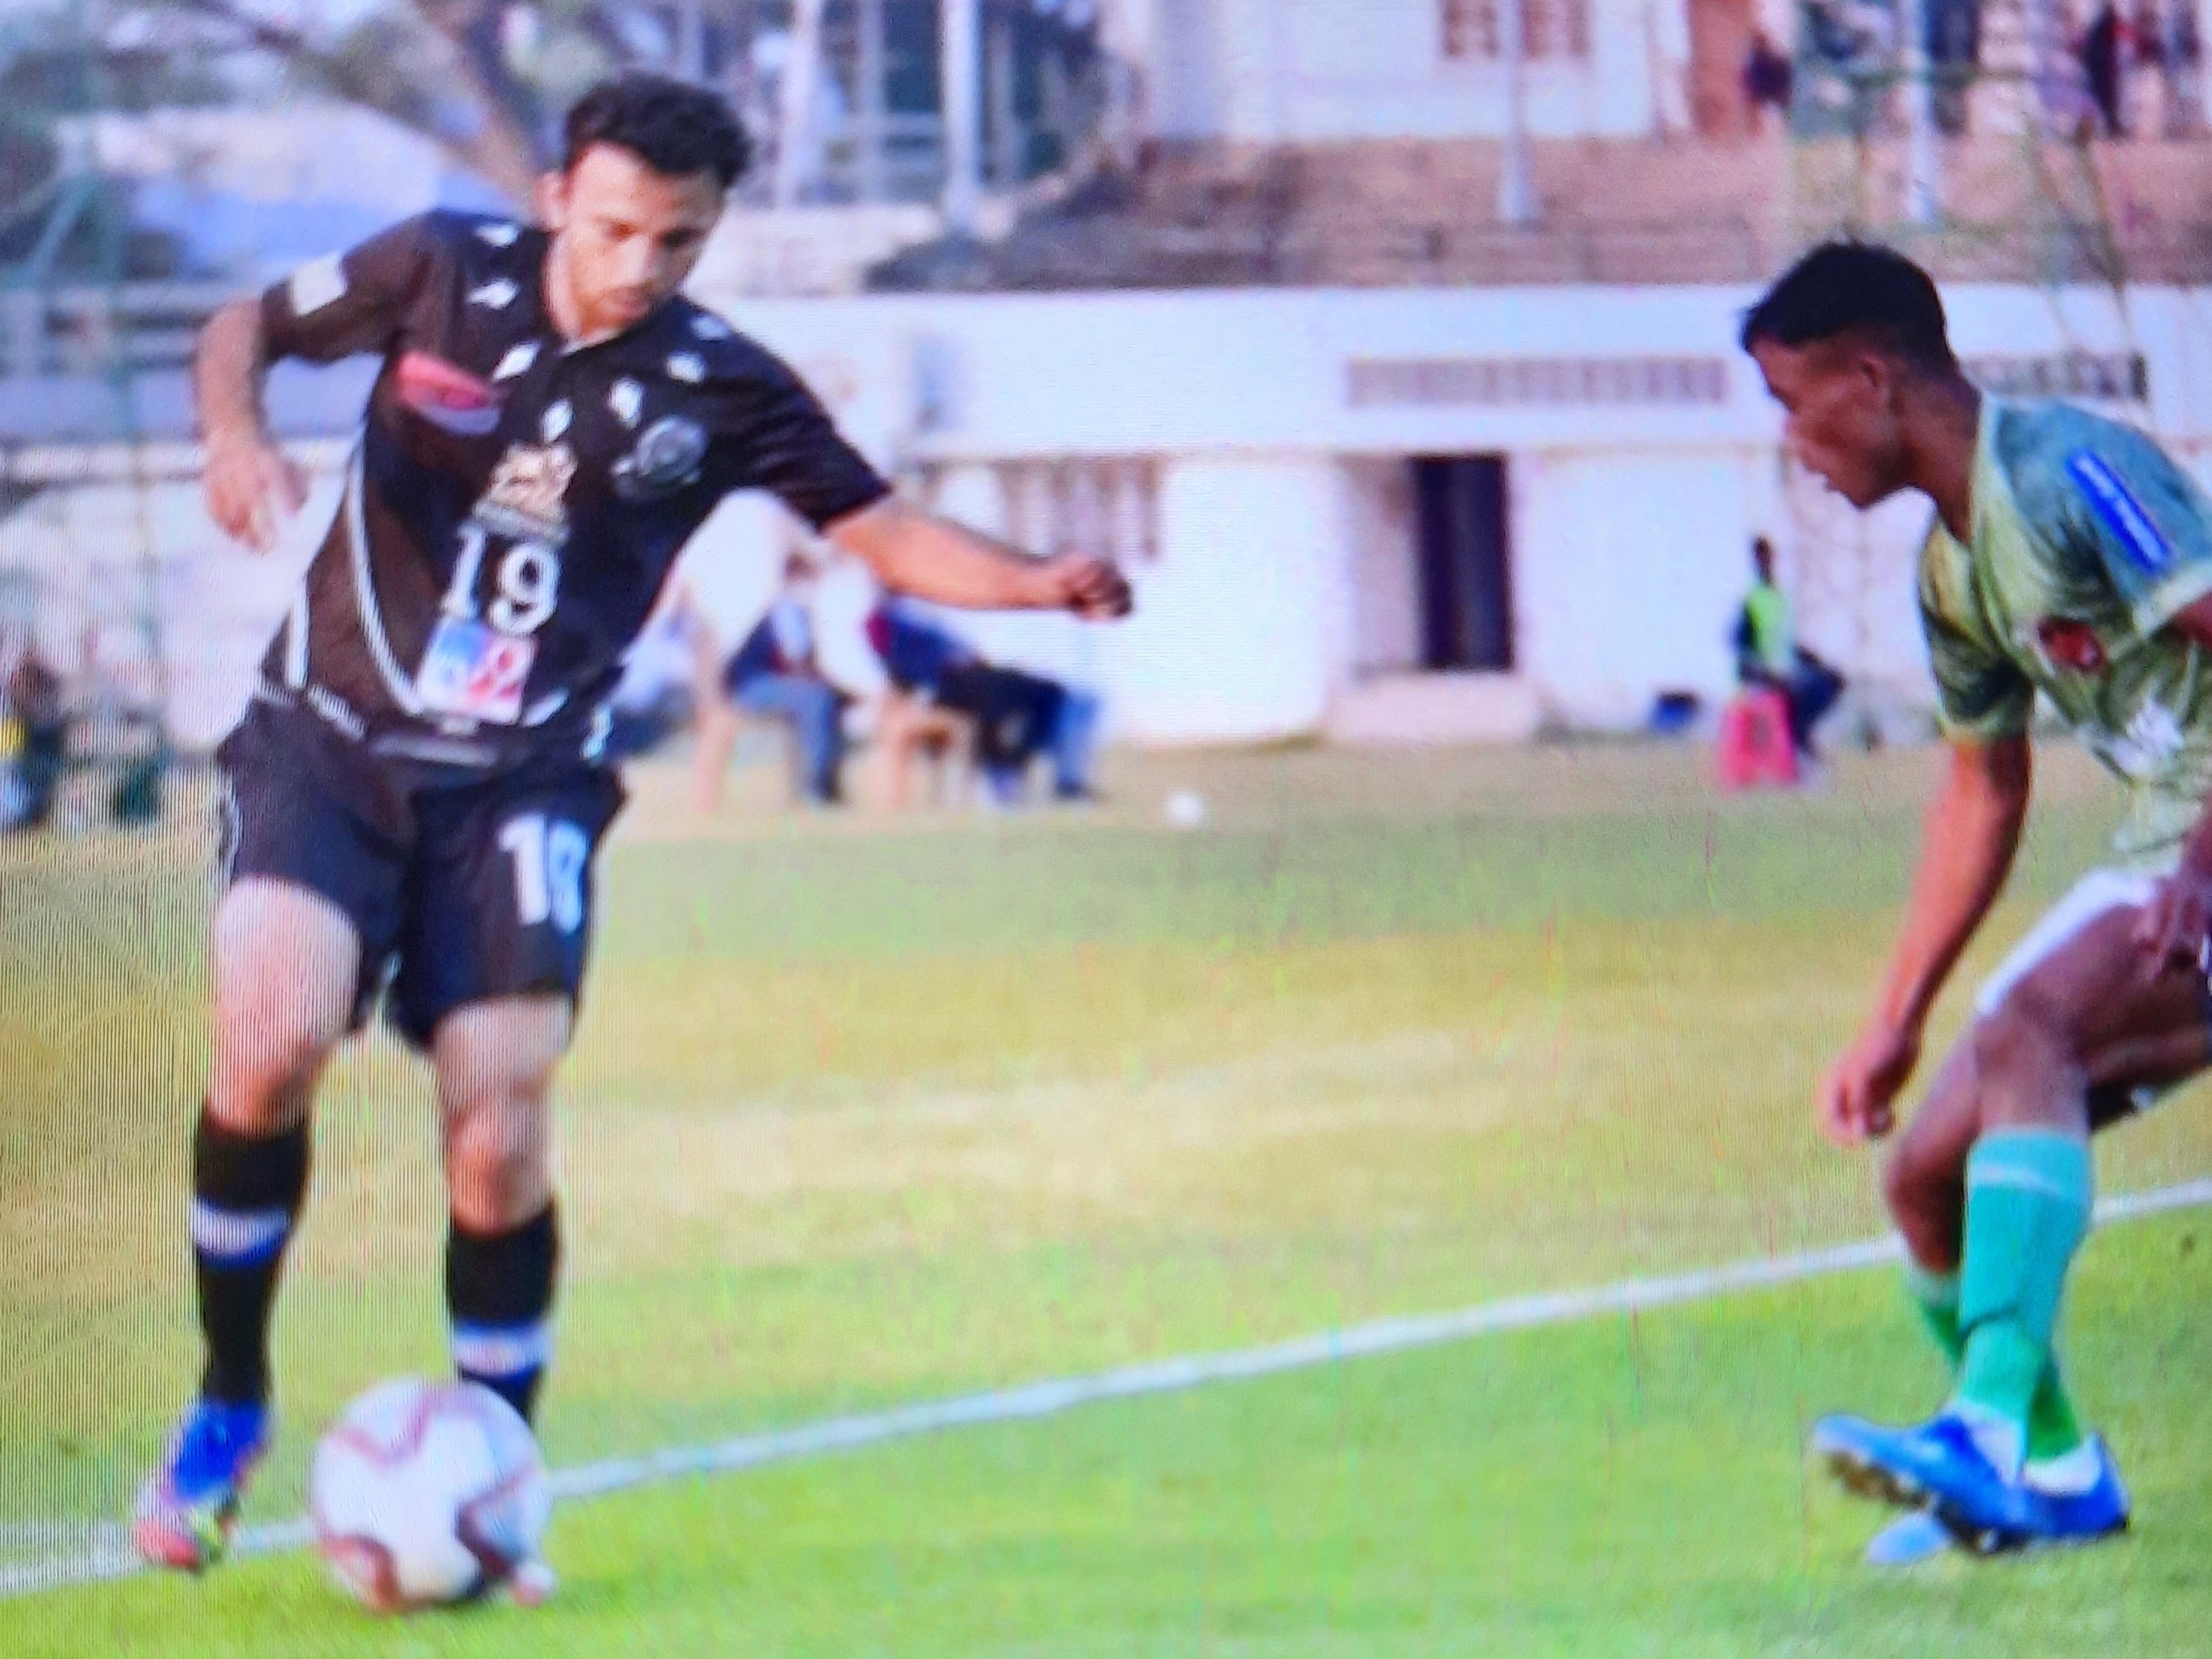 mohammad sporting beat gokulam kerela by 2-1 in i league match